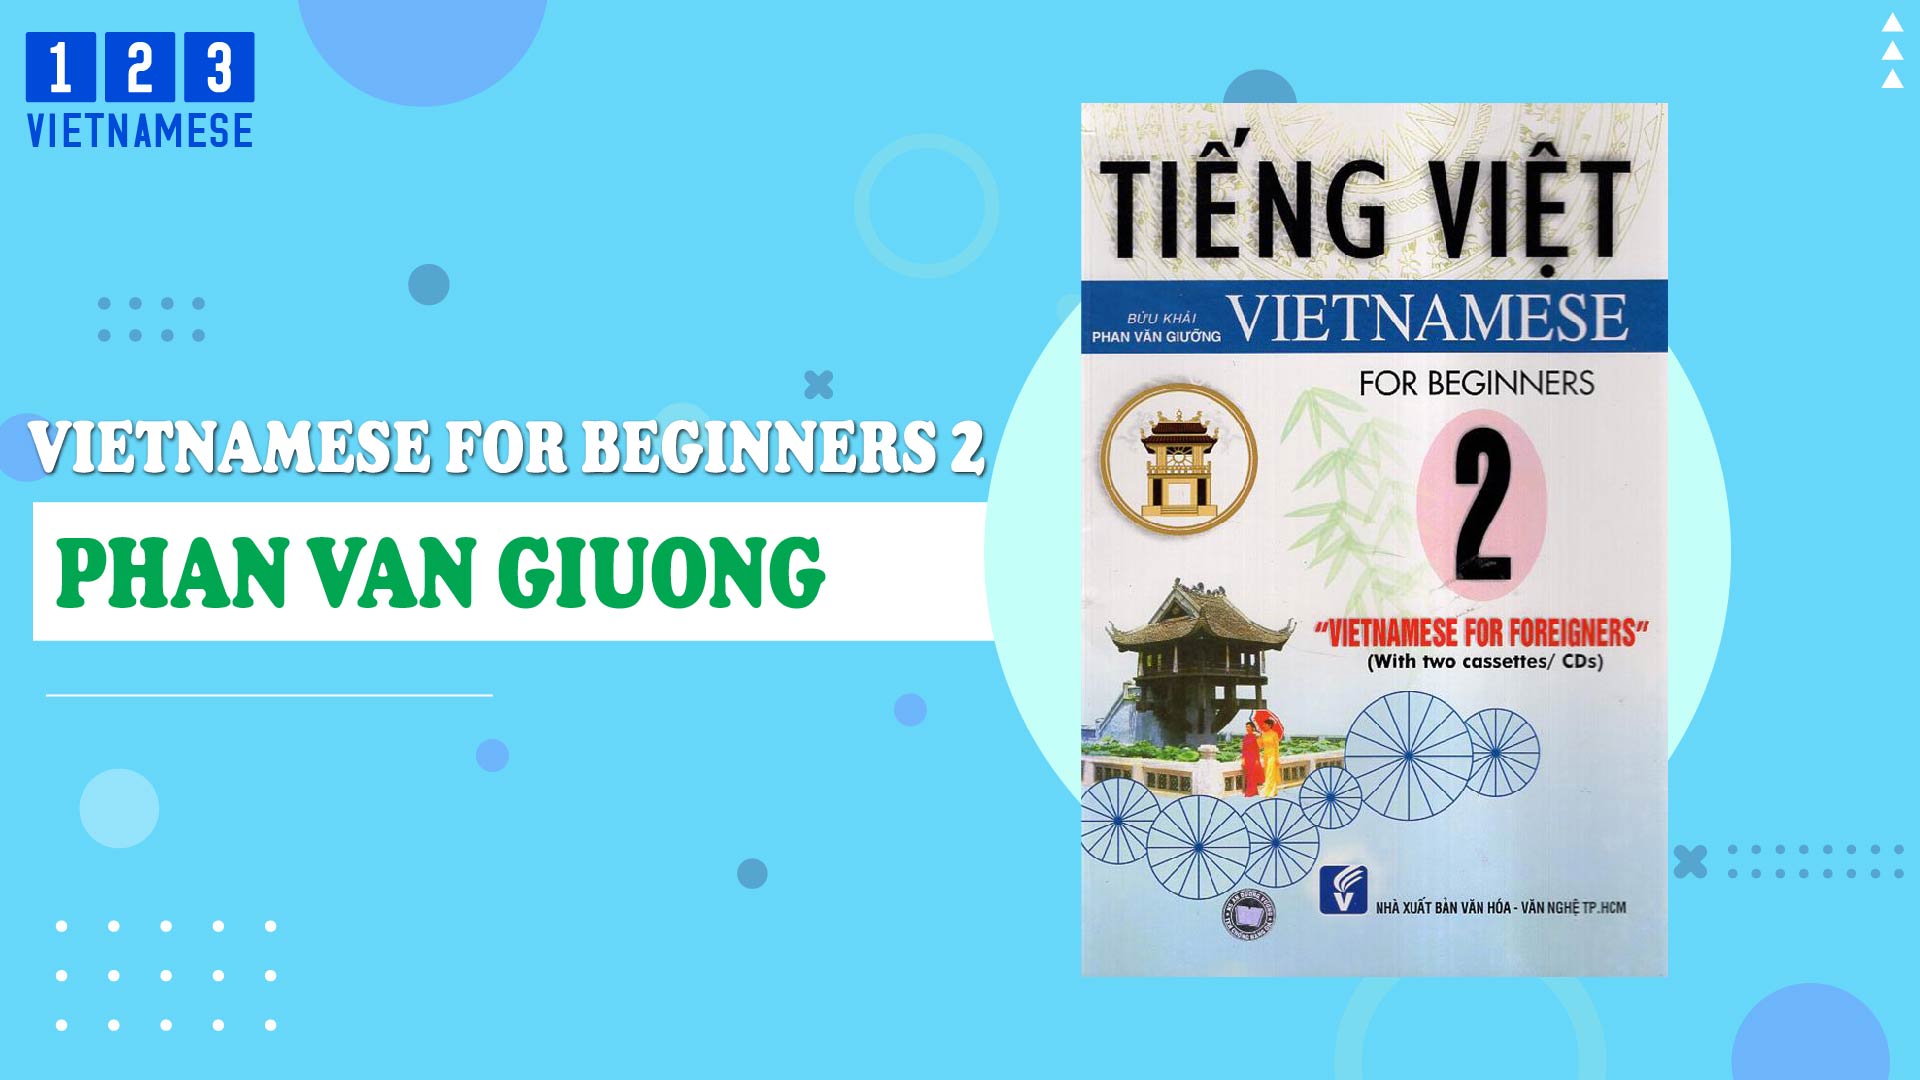 Vietnamese for Beginners 2 - Phan Van Giuong [Learning Vietnamese Book]